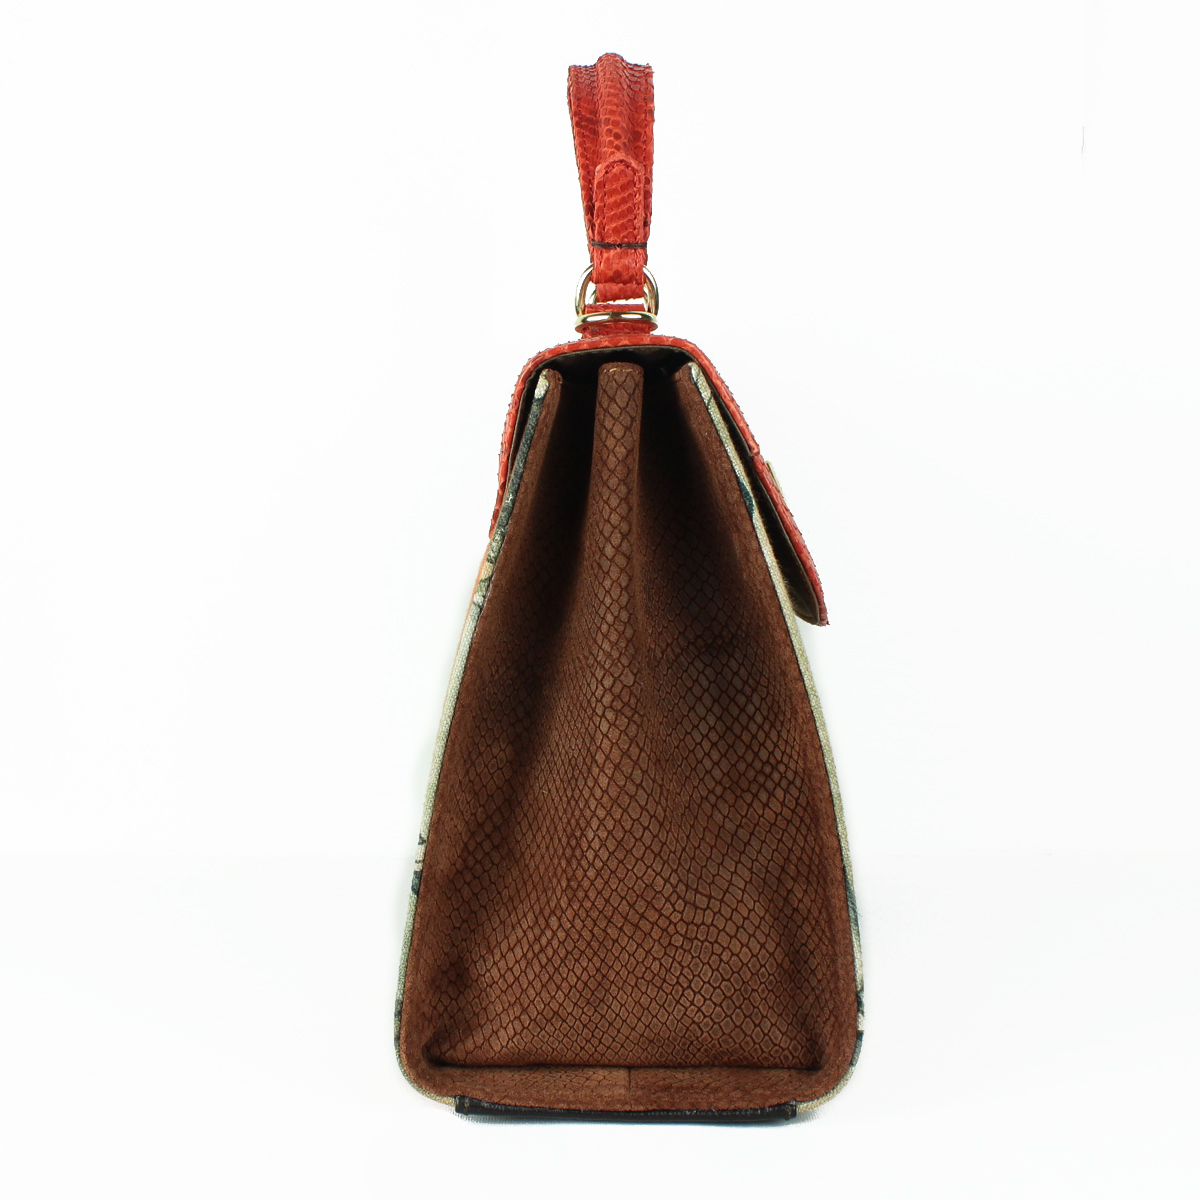 1lato - Federico Price | Handmade bags by craftsmen